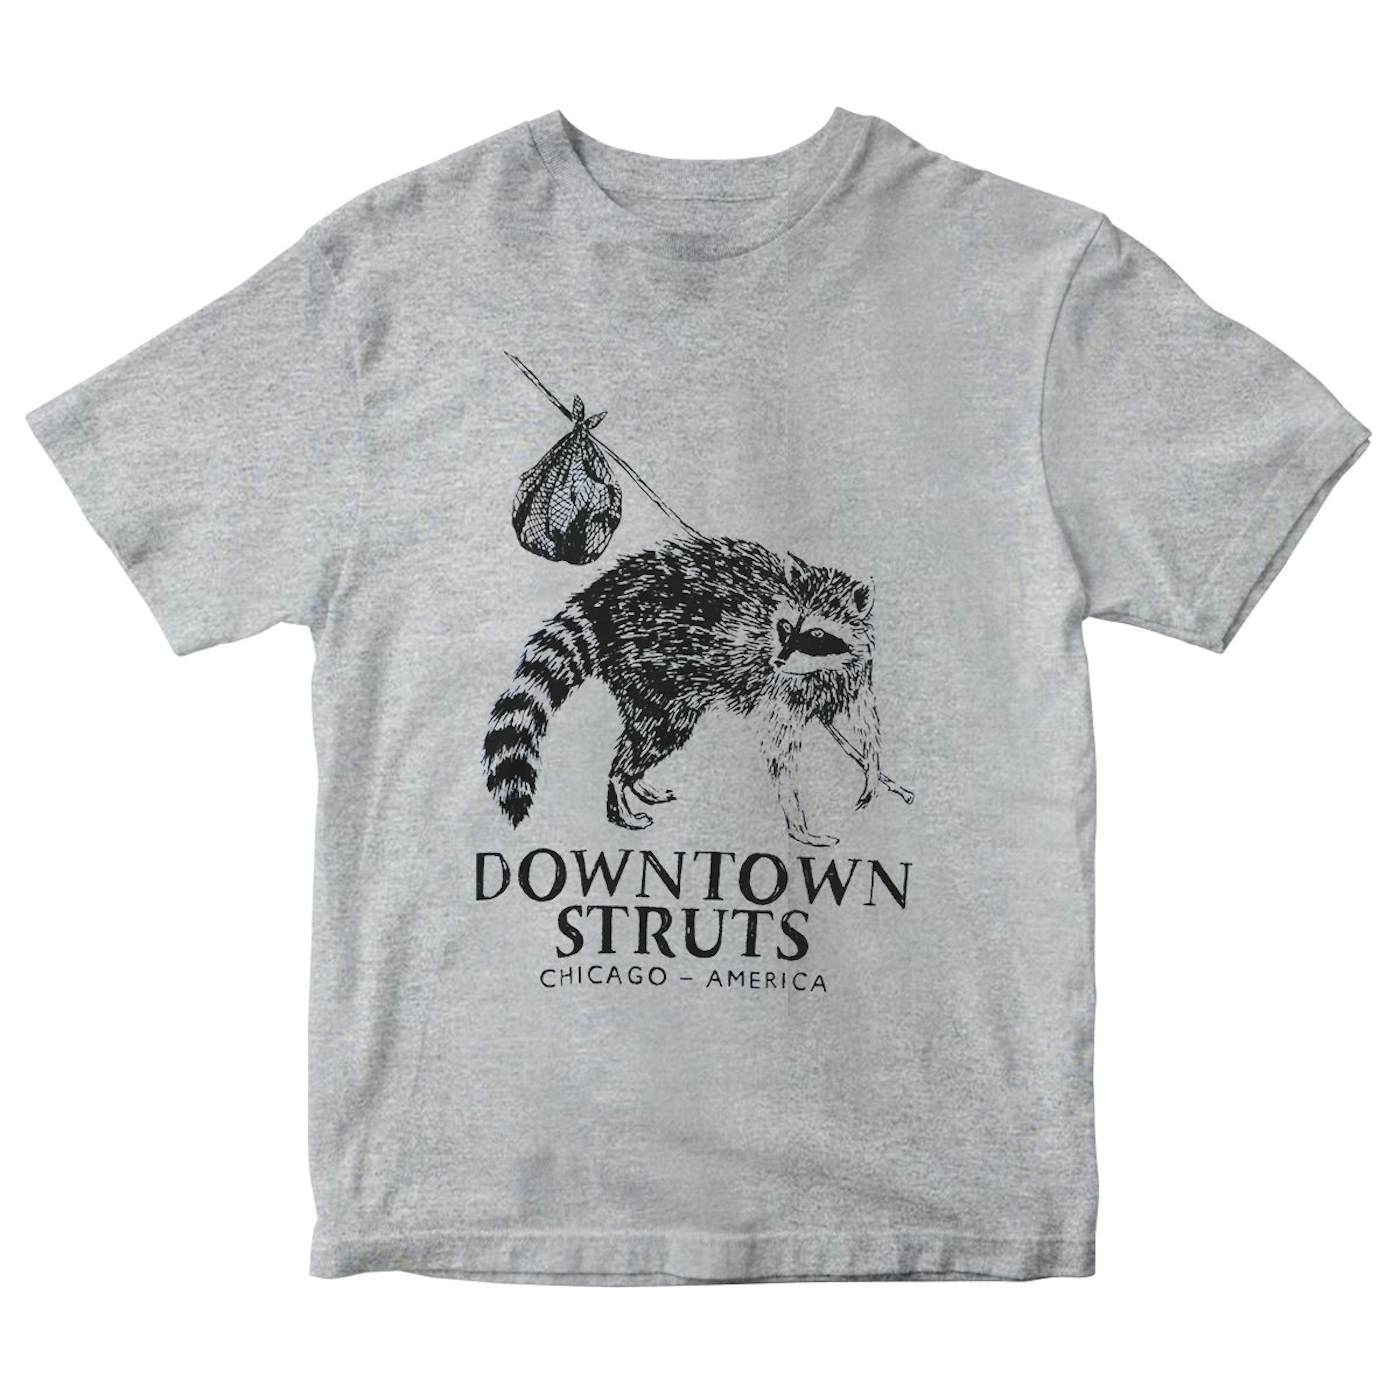 Downtown Struts - Raccoon - White - T-Shirt